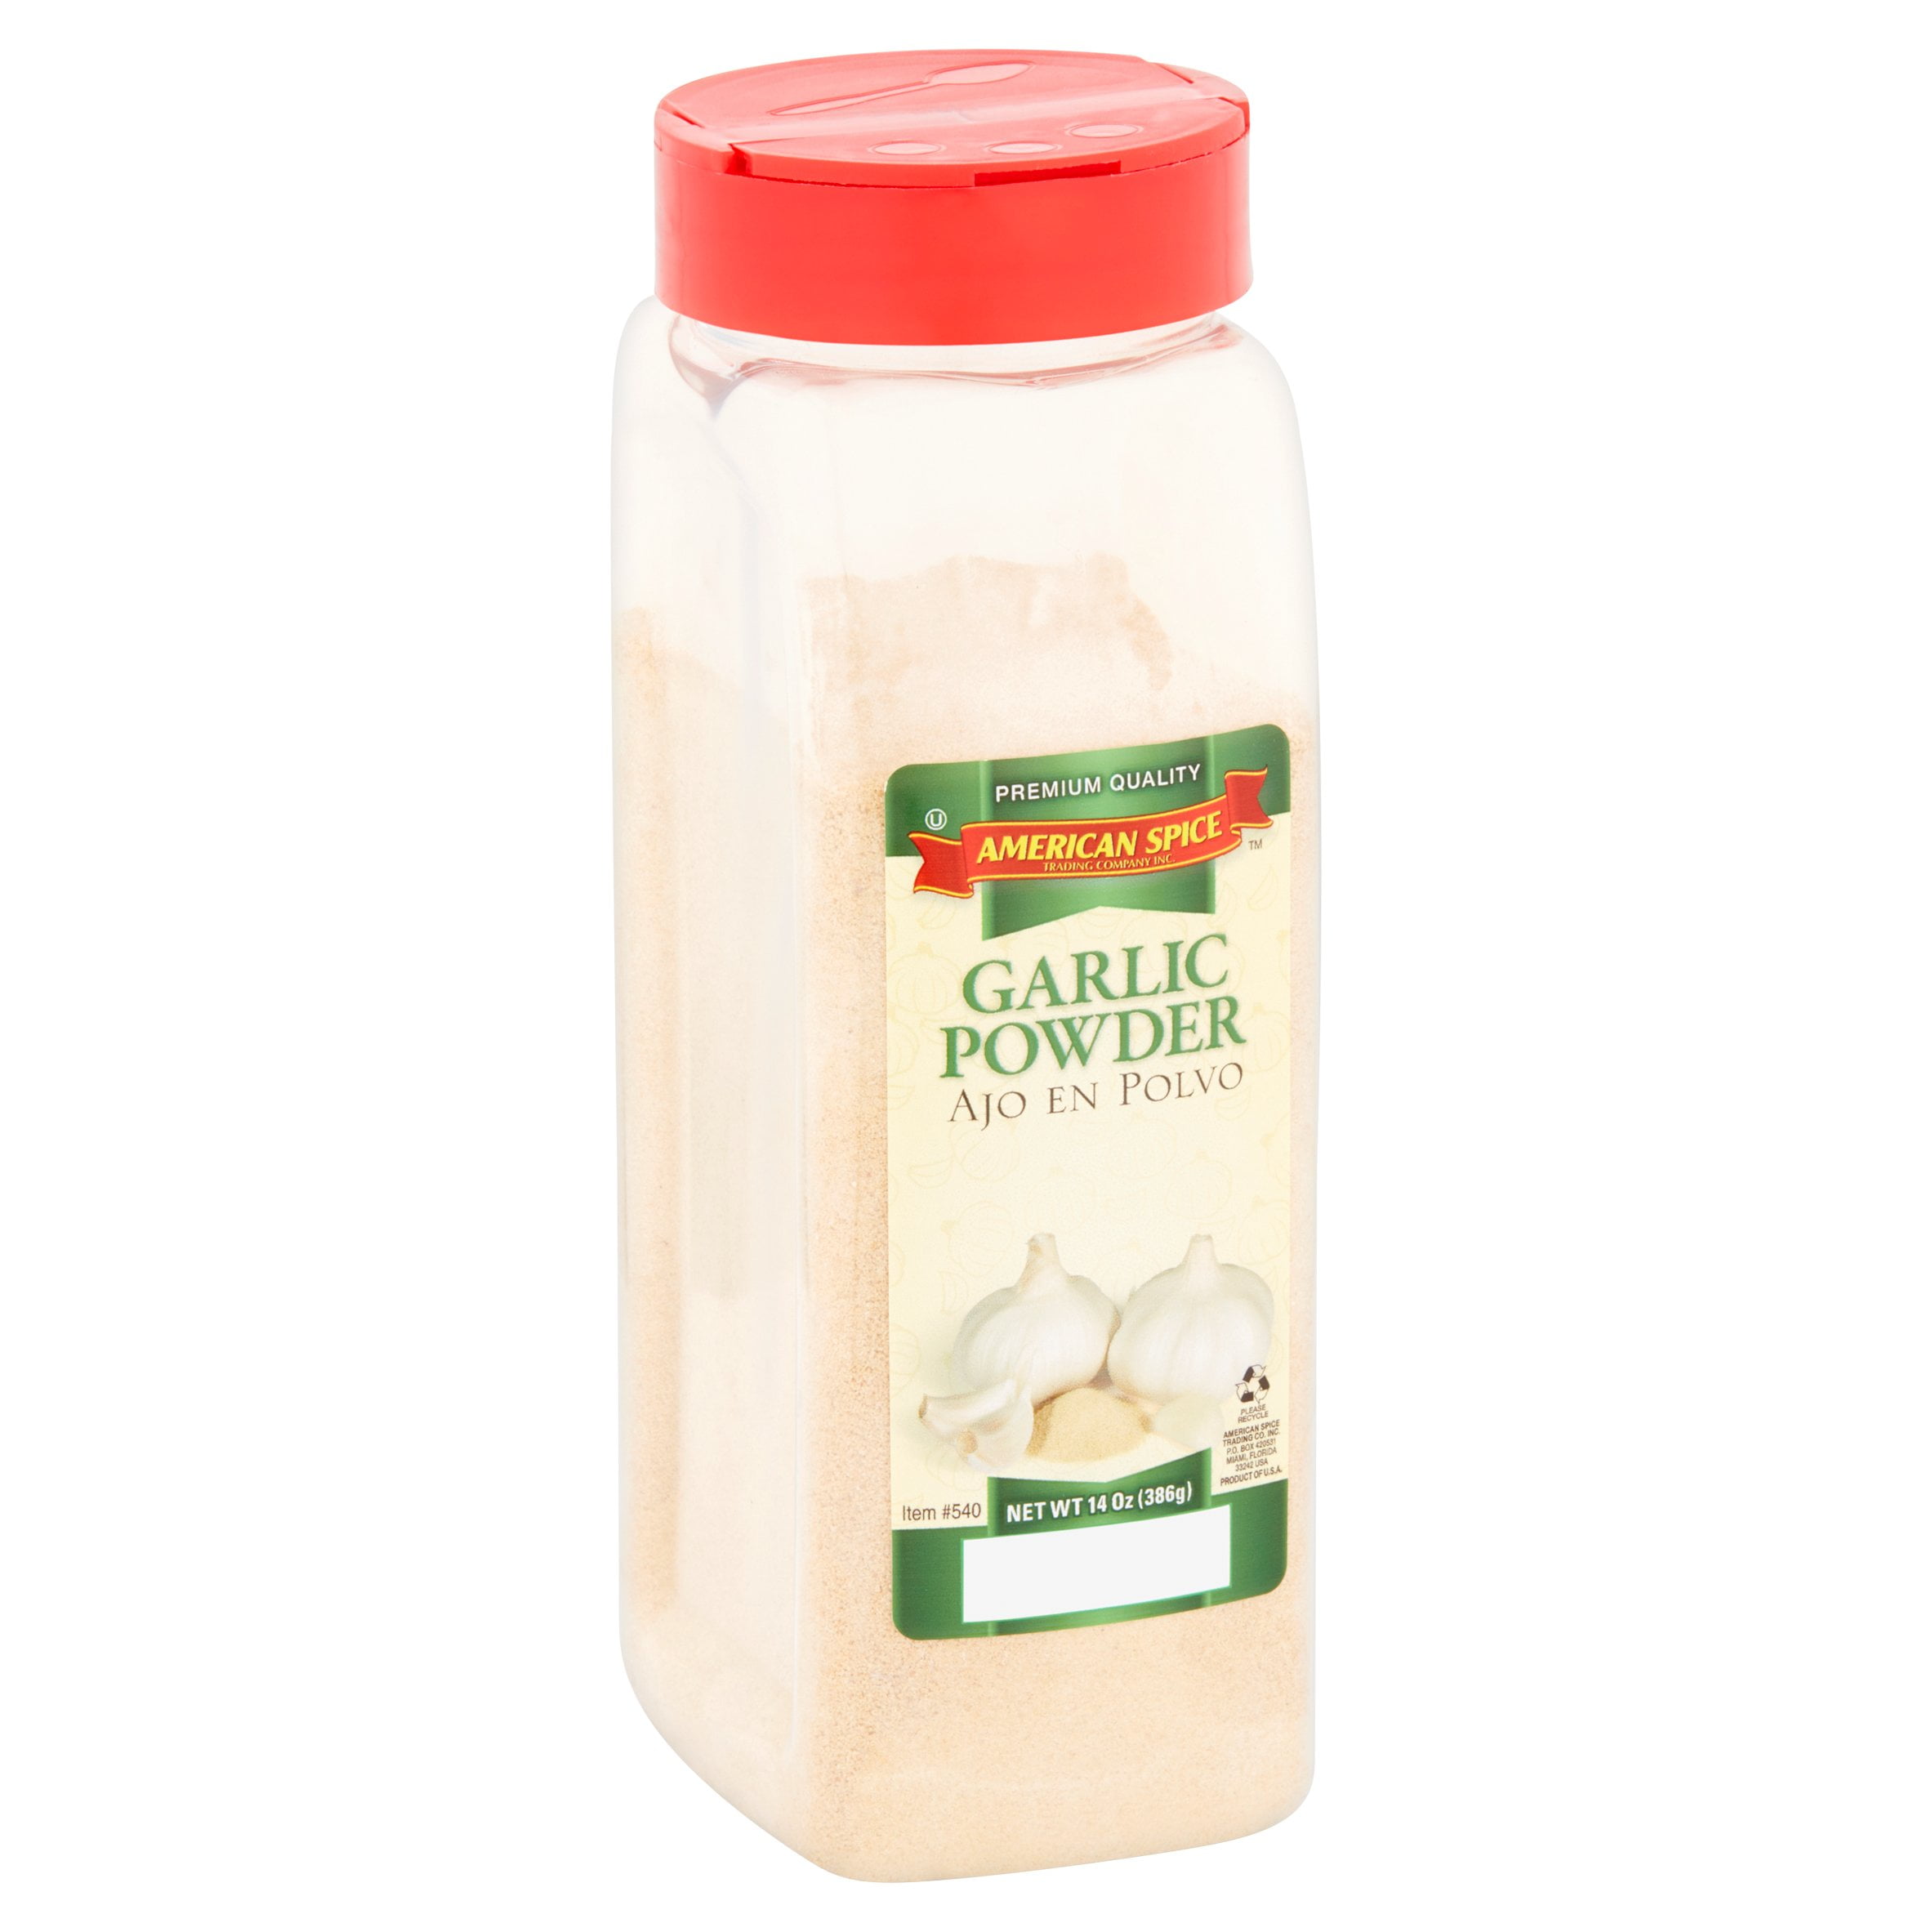 Garlic Powder 65g in Spice Rack Bucket FREE UK Post